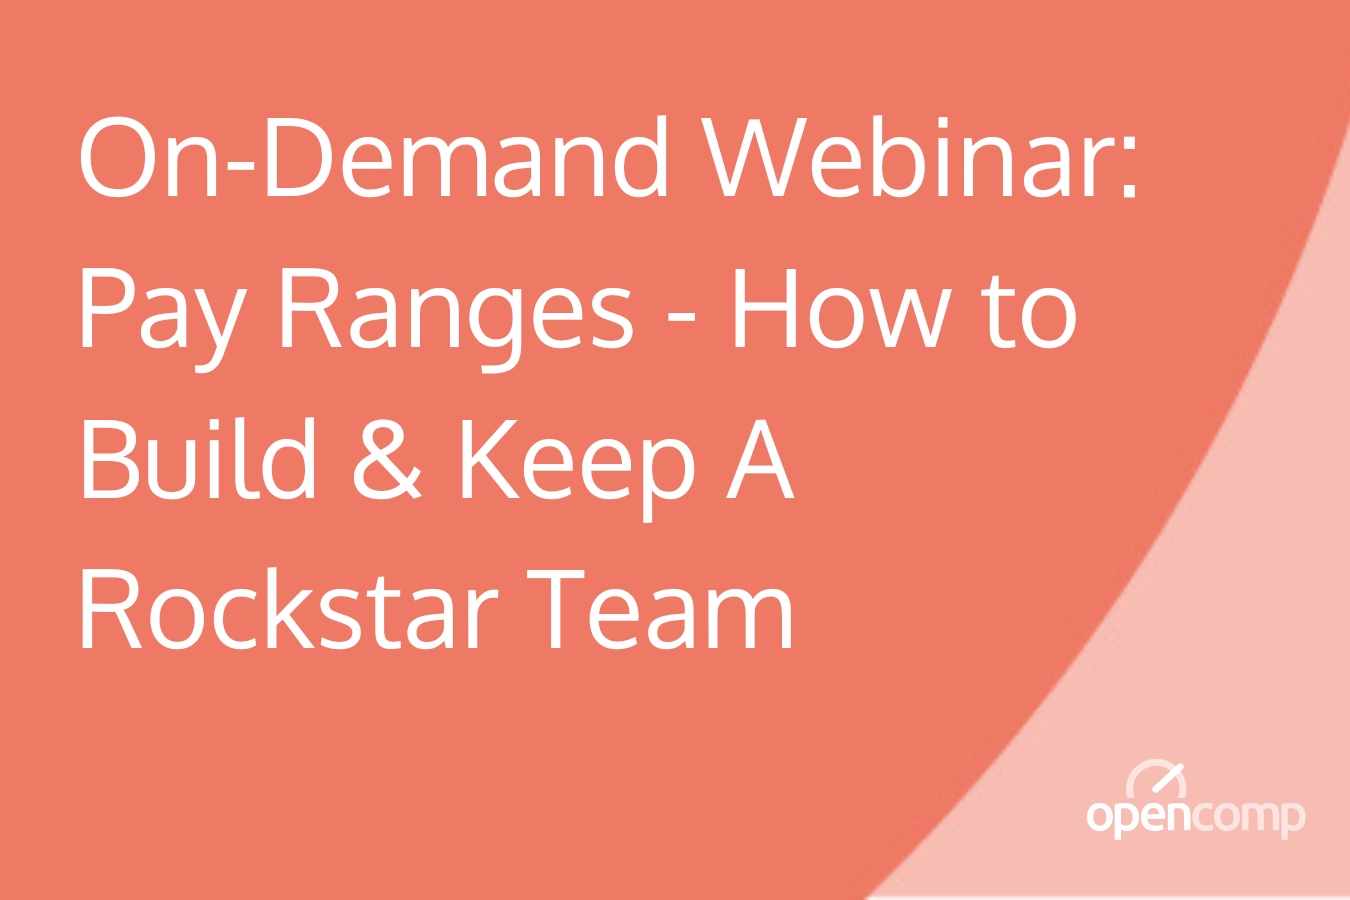 On-Demand Webinar Pay Ranges - How to Build  Keep A Rockstar Team